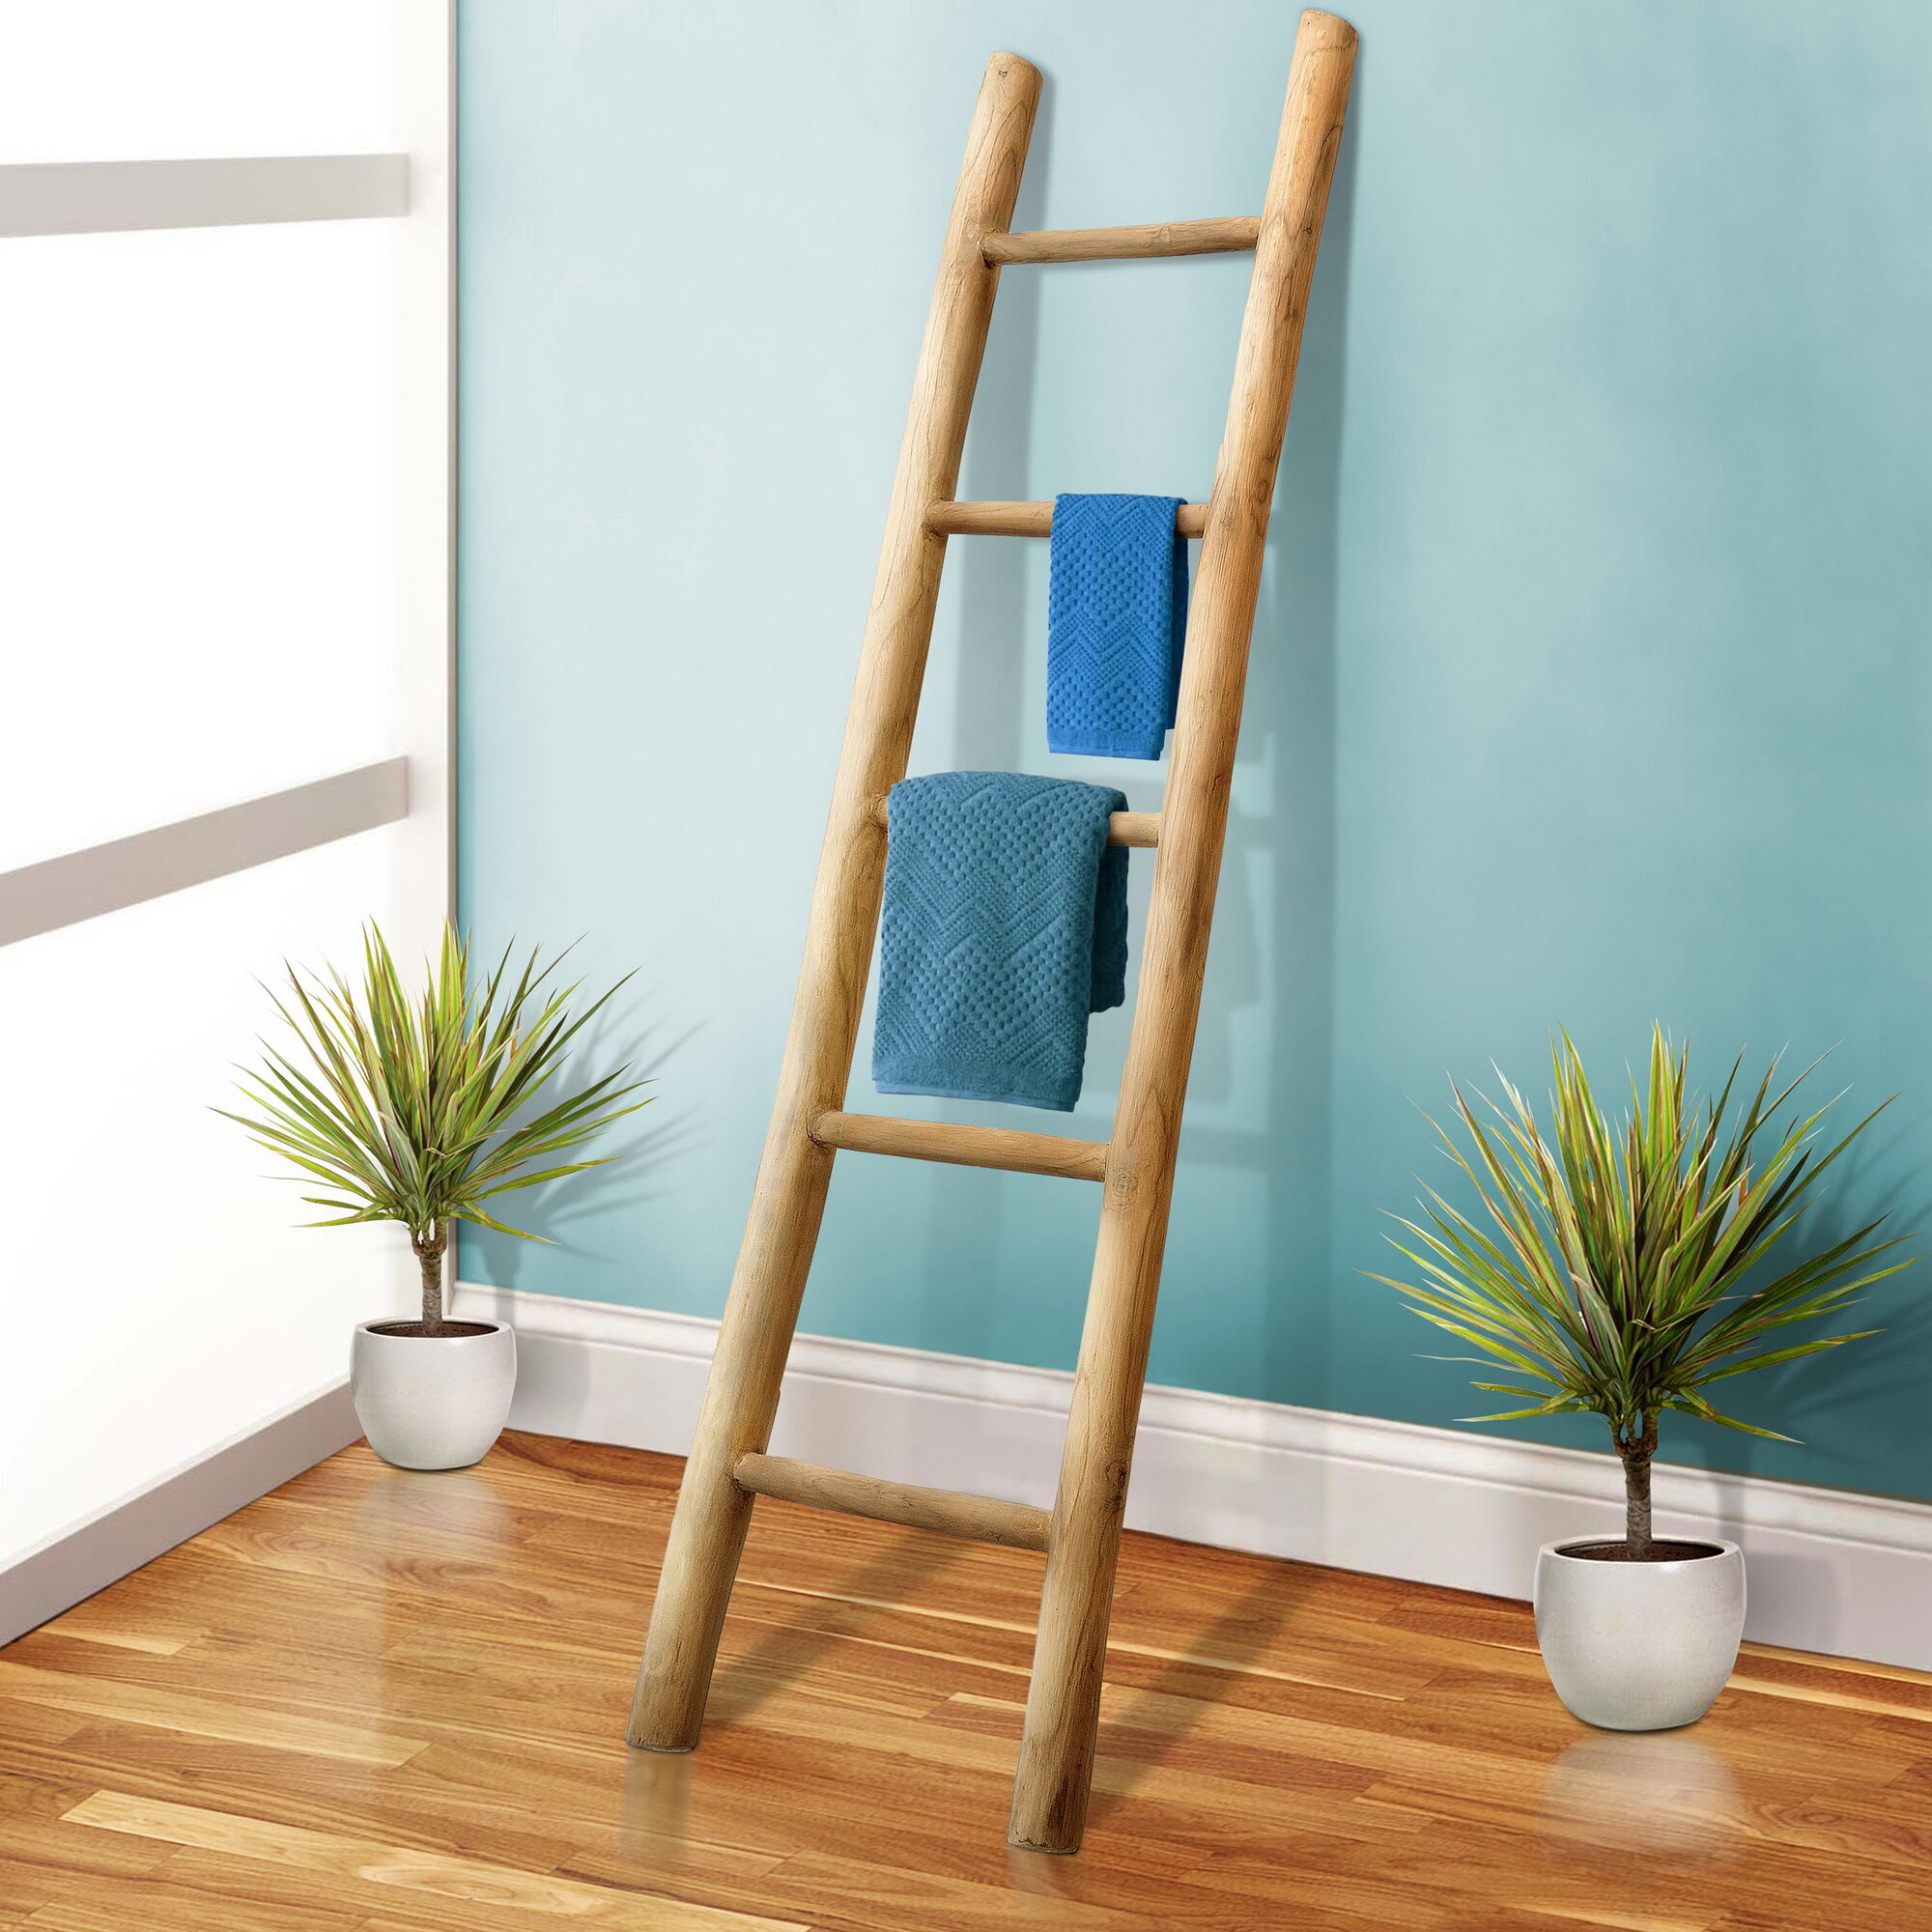 Millwood Pines 5 Ft Blanket Ladder Reviews Wayfair